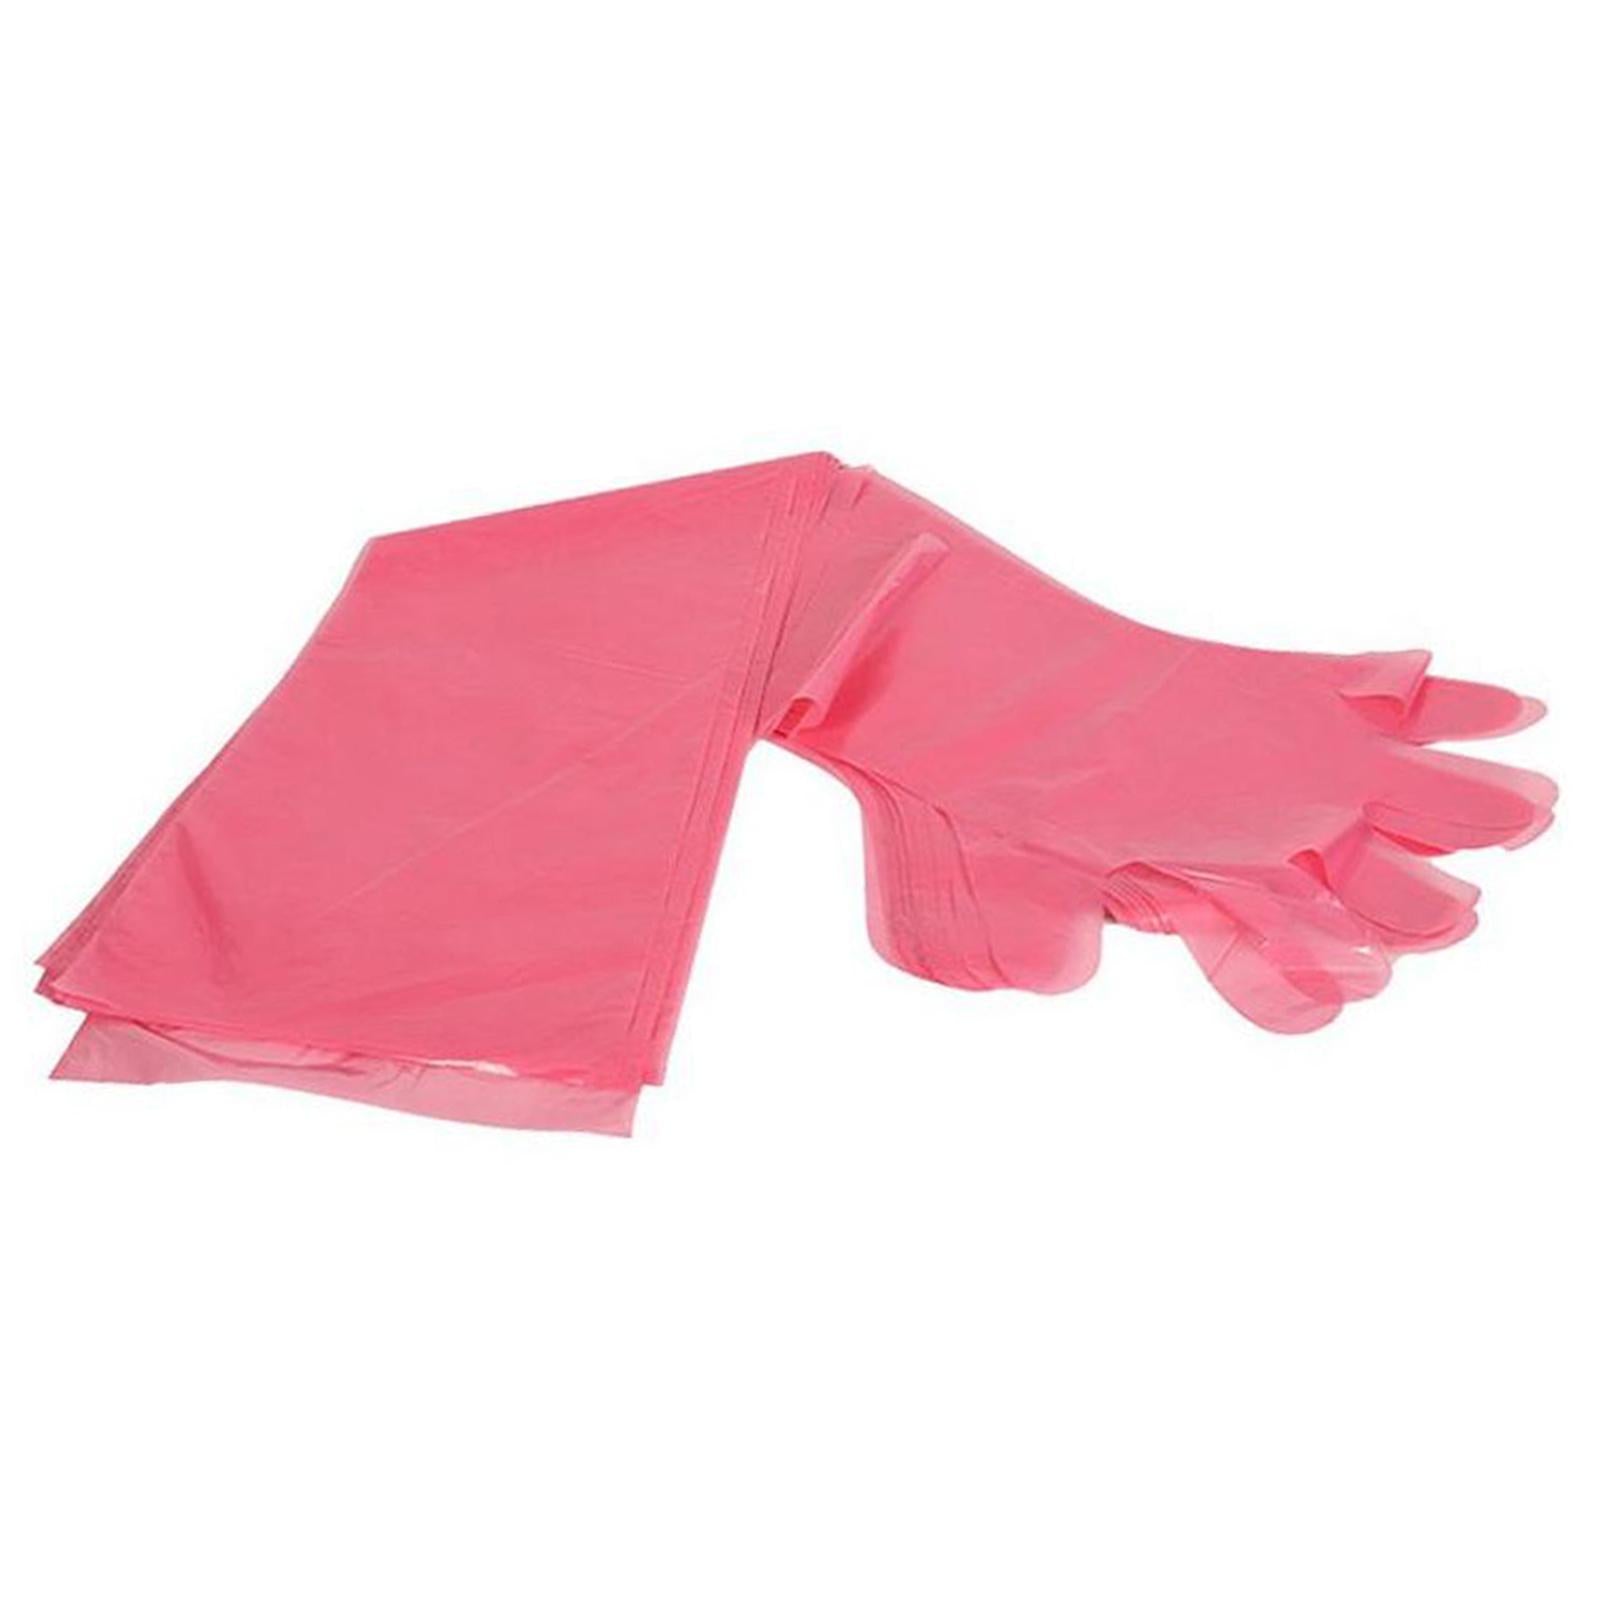 100Pcs Disposable Long Arm Gloves Vet Glove for Fishing Pet Care Beauty Hair White